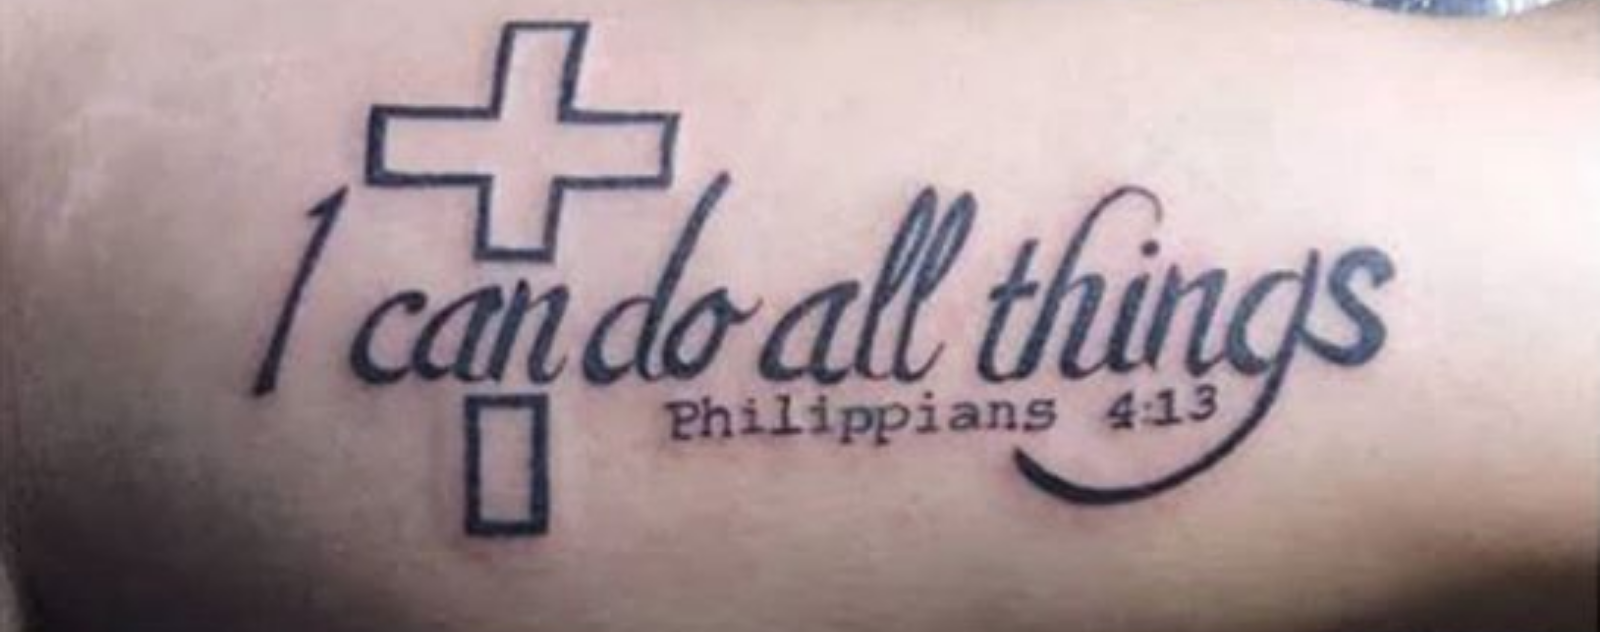 philippians-4-13-tattoo-with-cross-6